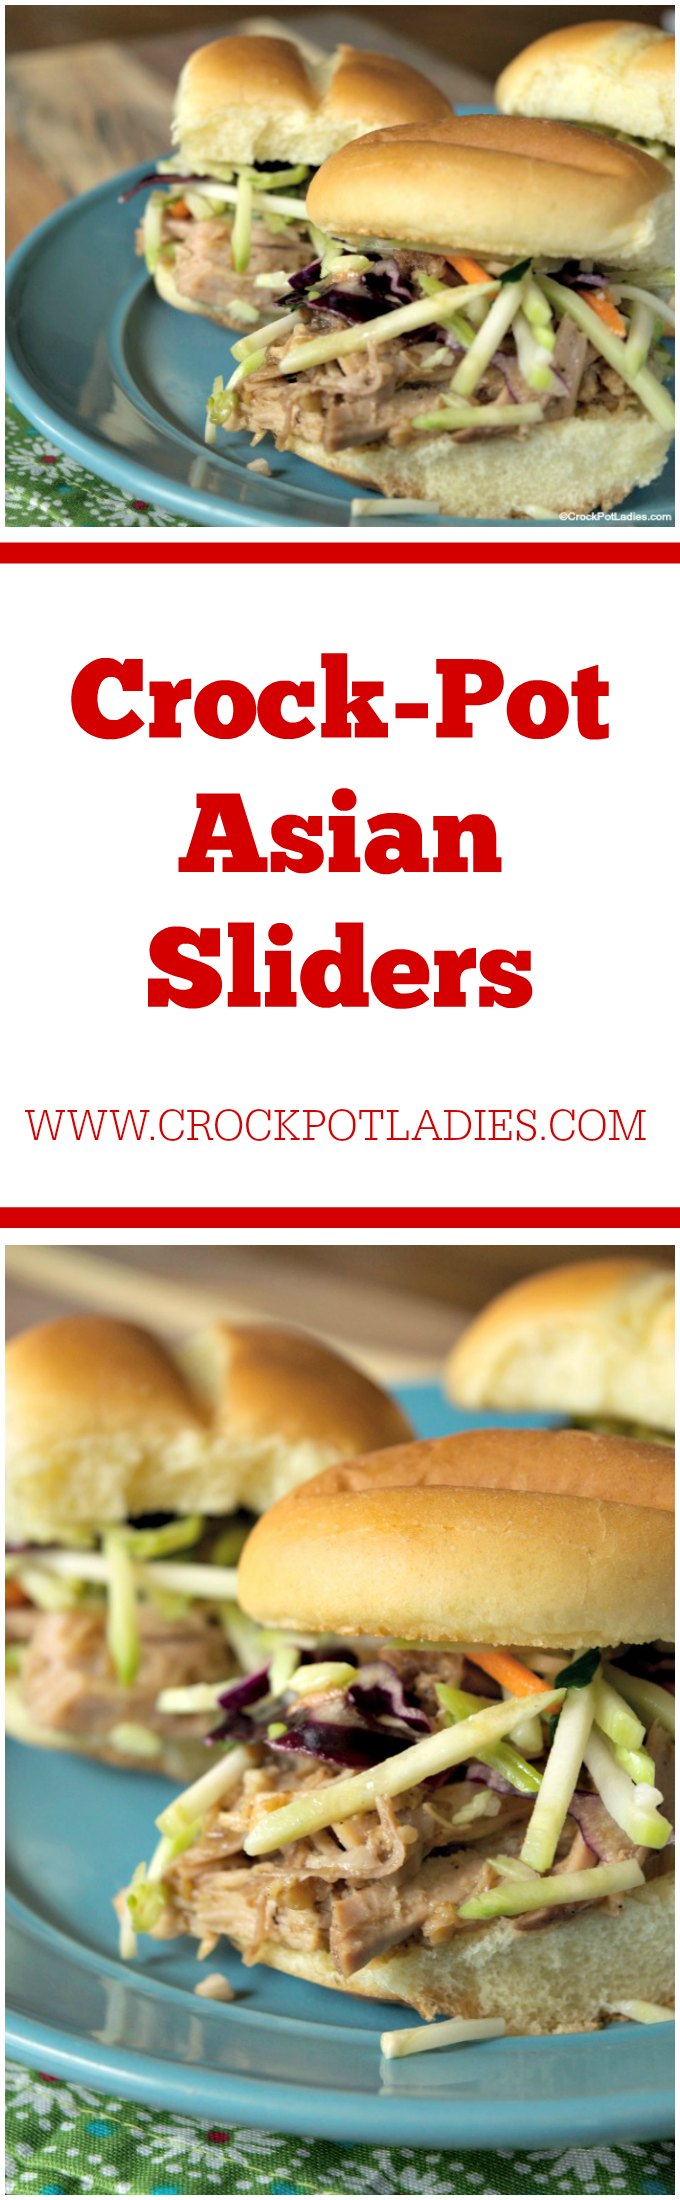 Crock-Pot Asian Sliders